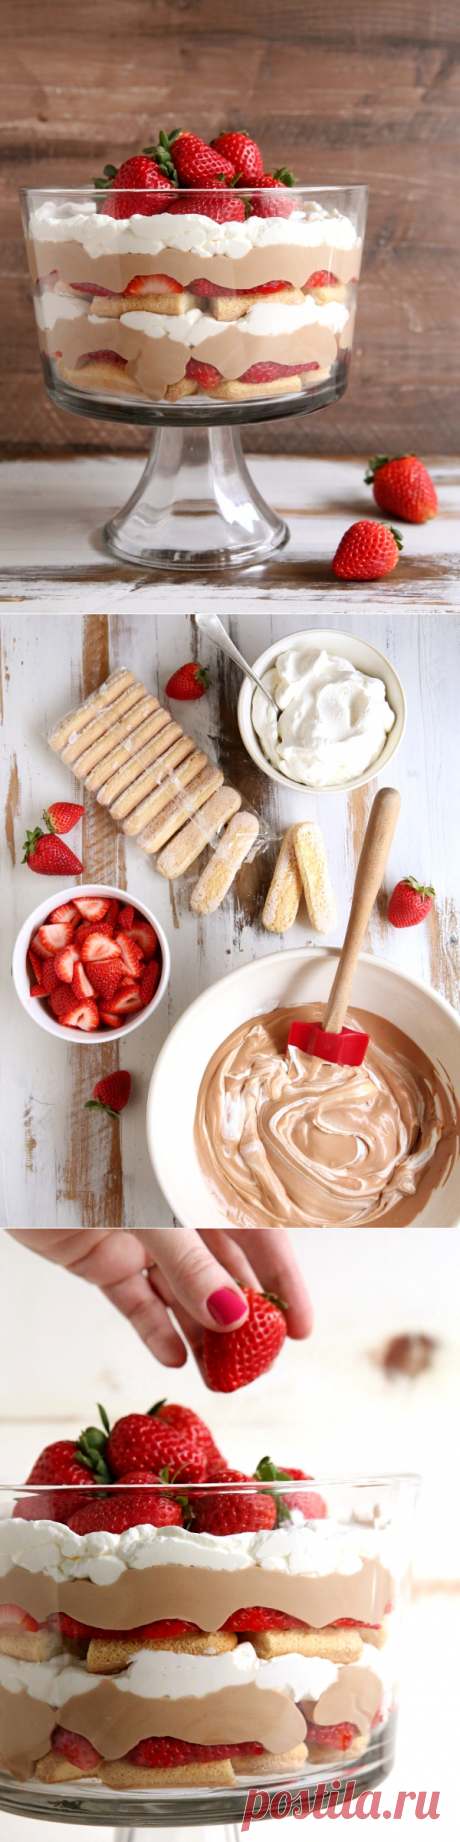 Strawberry Chocolate Tiramisu Trifle - Completely Delicious